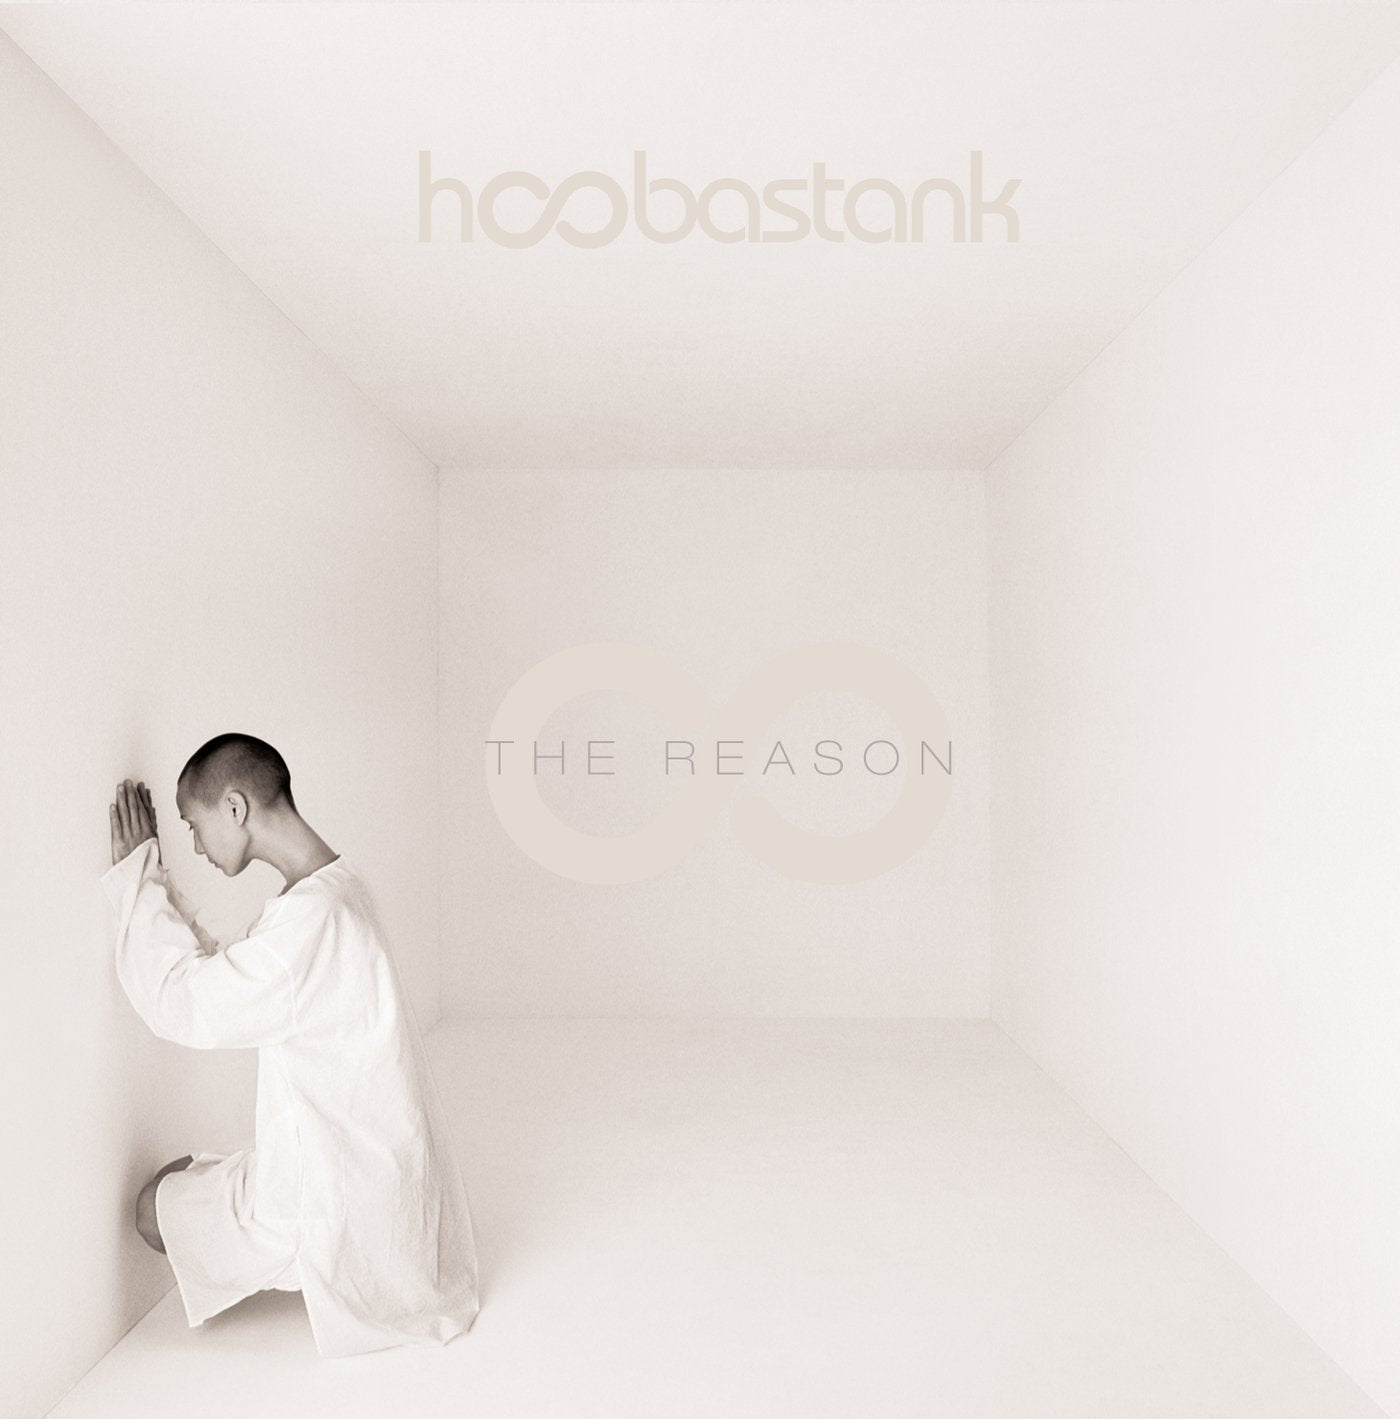 [DAMAGED] Hoobastank - The Reason (15th Anniversary Edition)